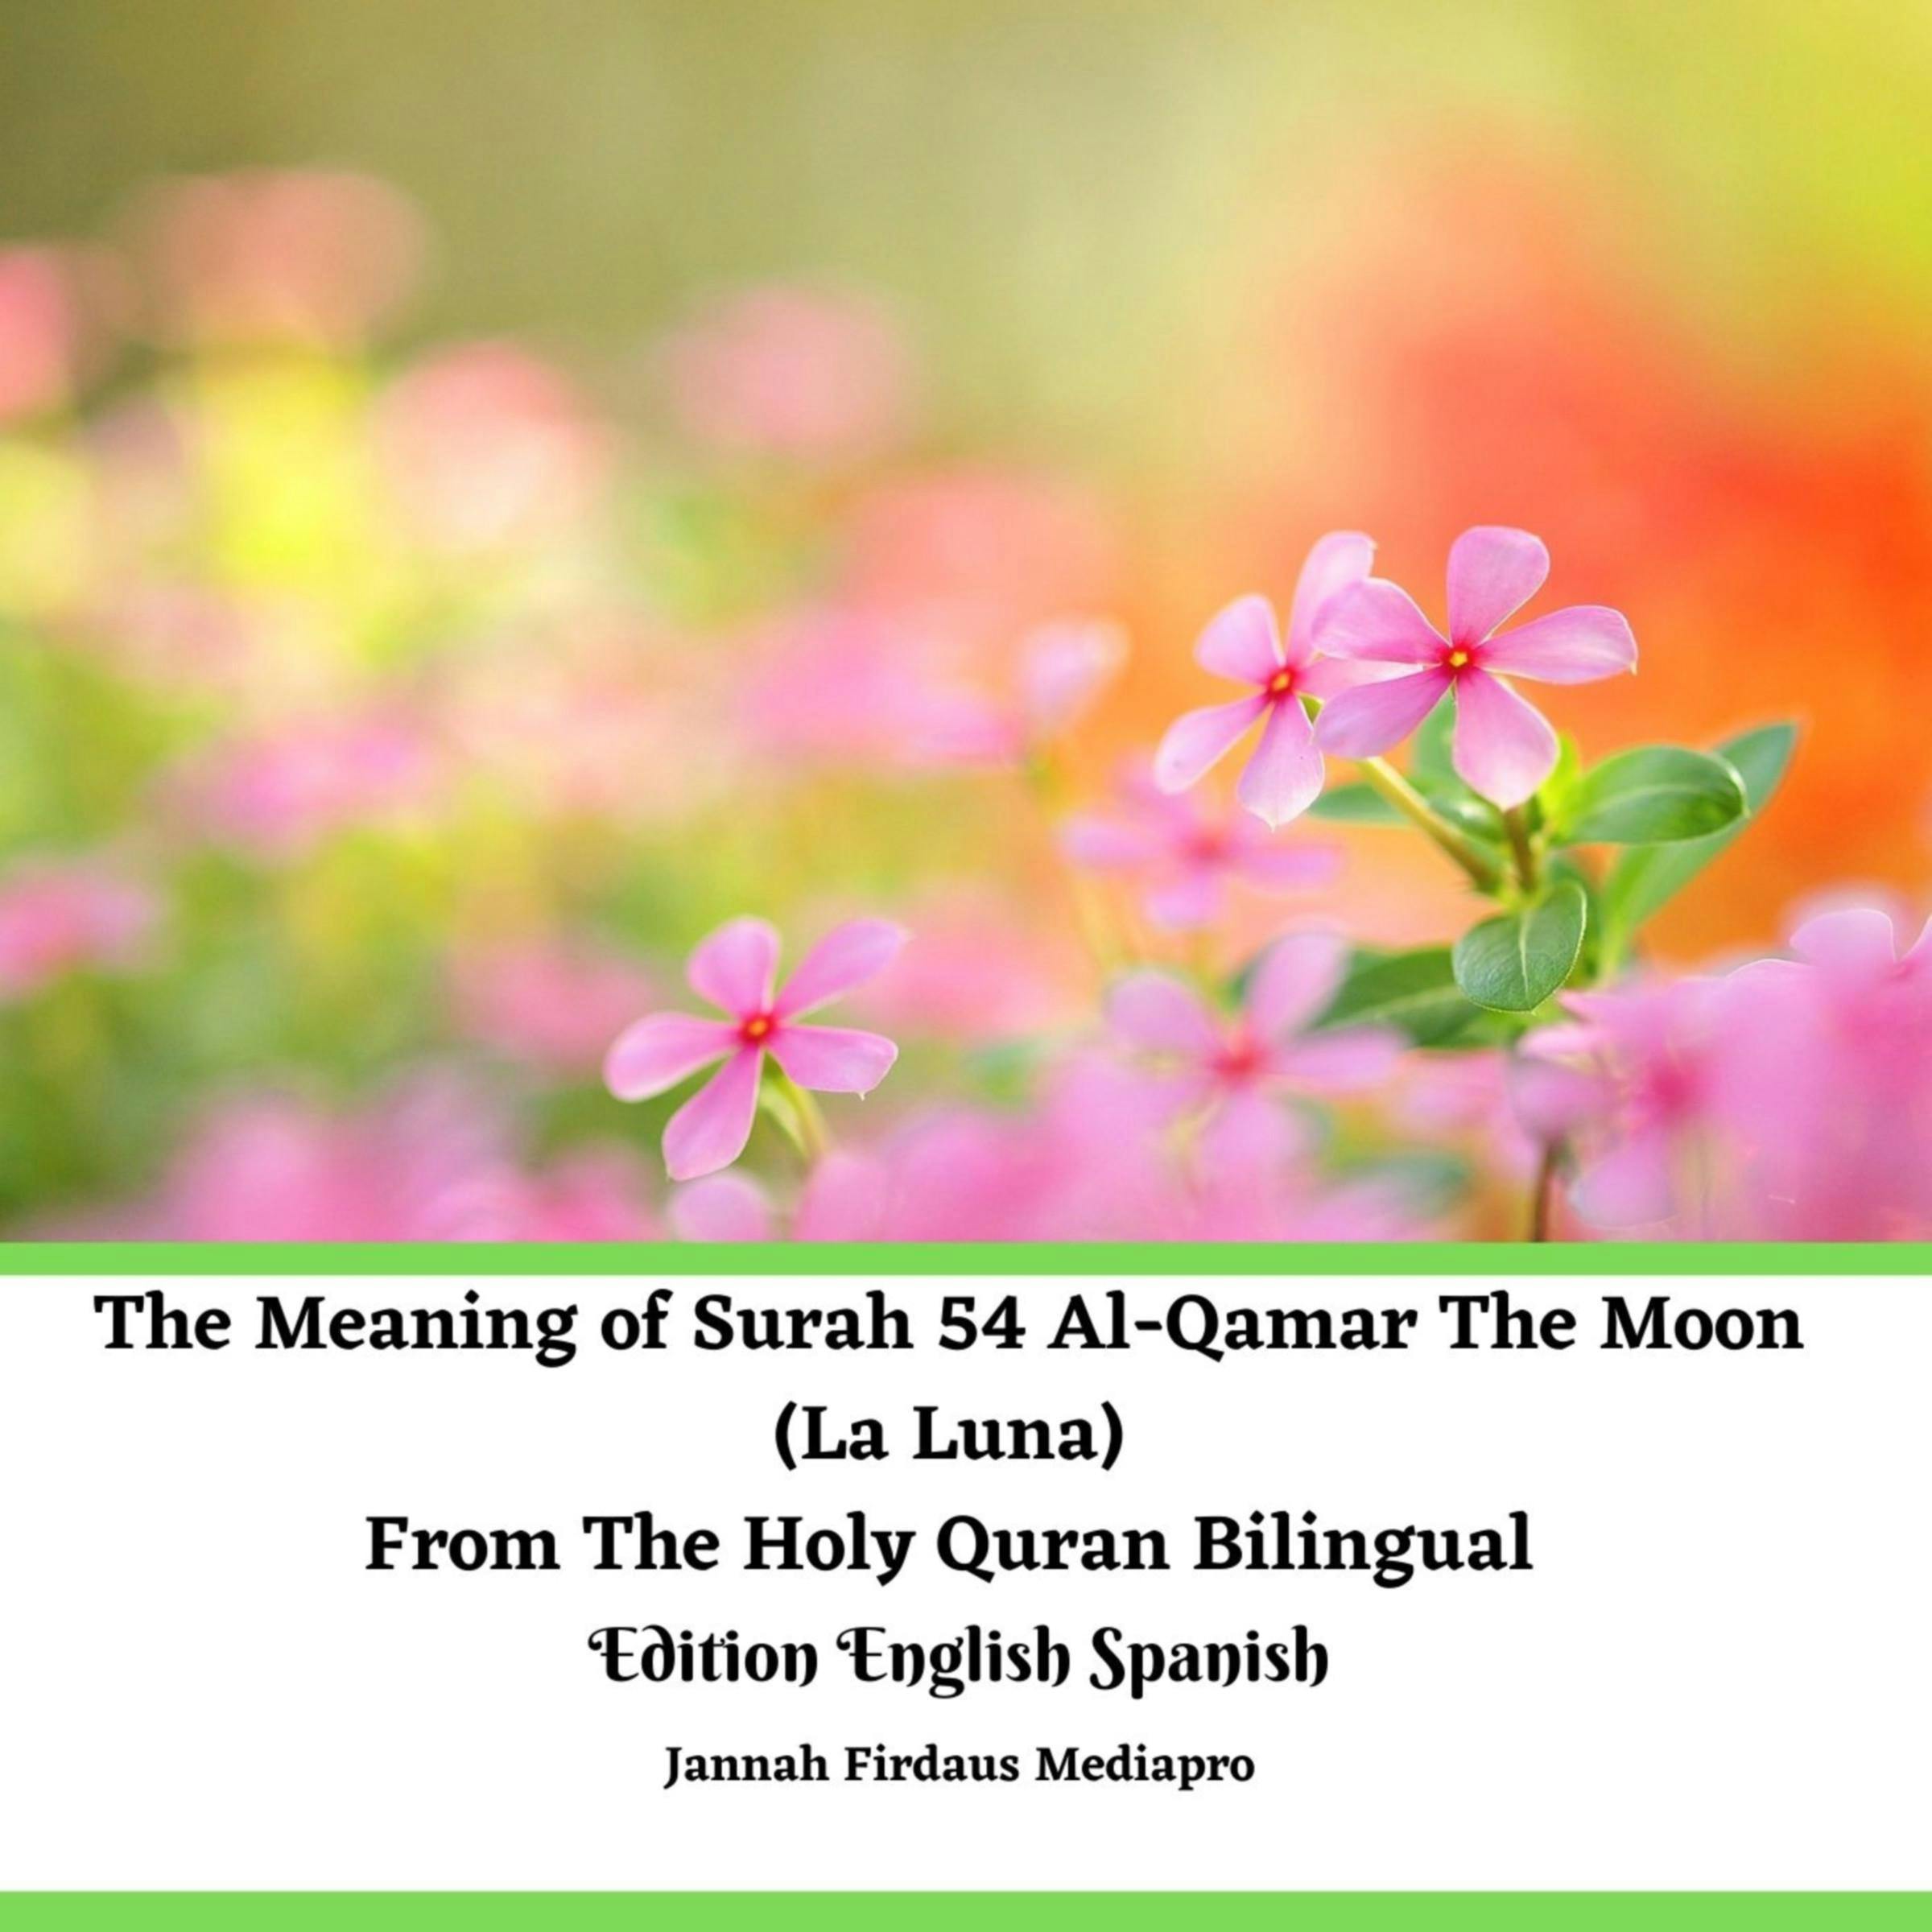 The Meaning of Surah 54 Al-Qamar The Moon (La Luna) From The Holy Quran Bilingual Edition English Spanish - Jannah Firdaus Mediapro